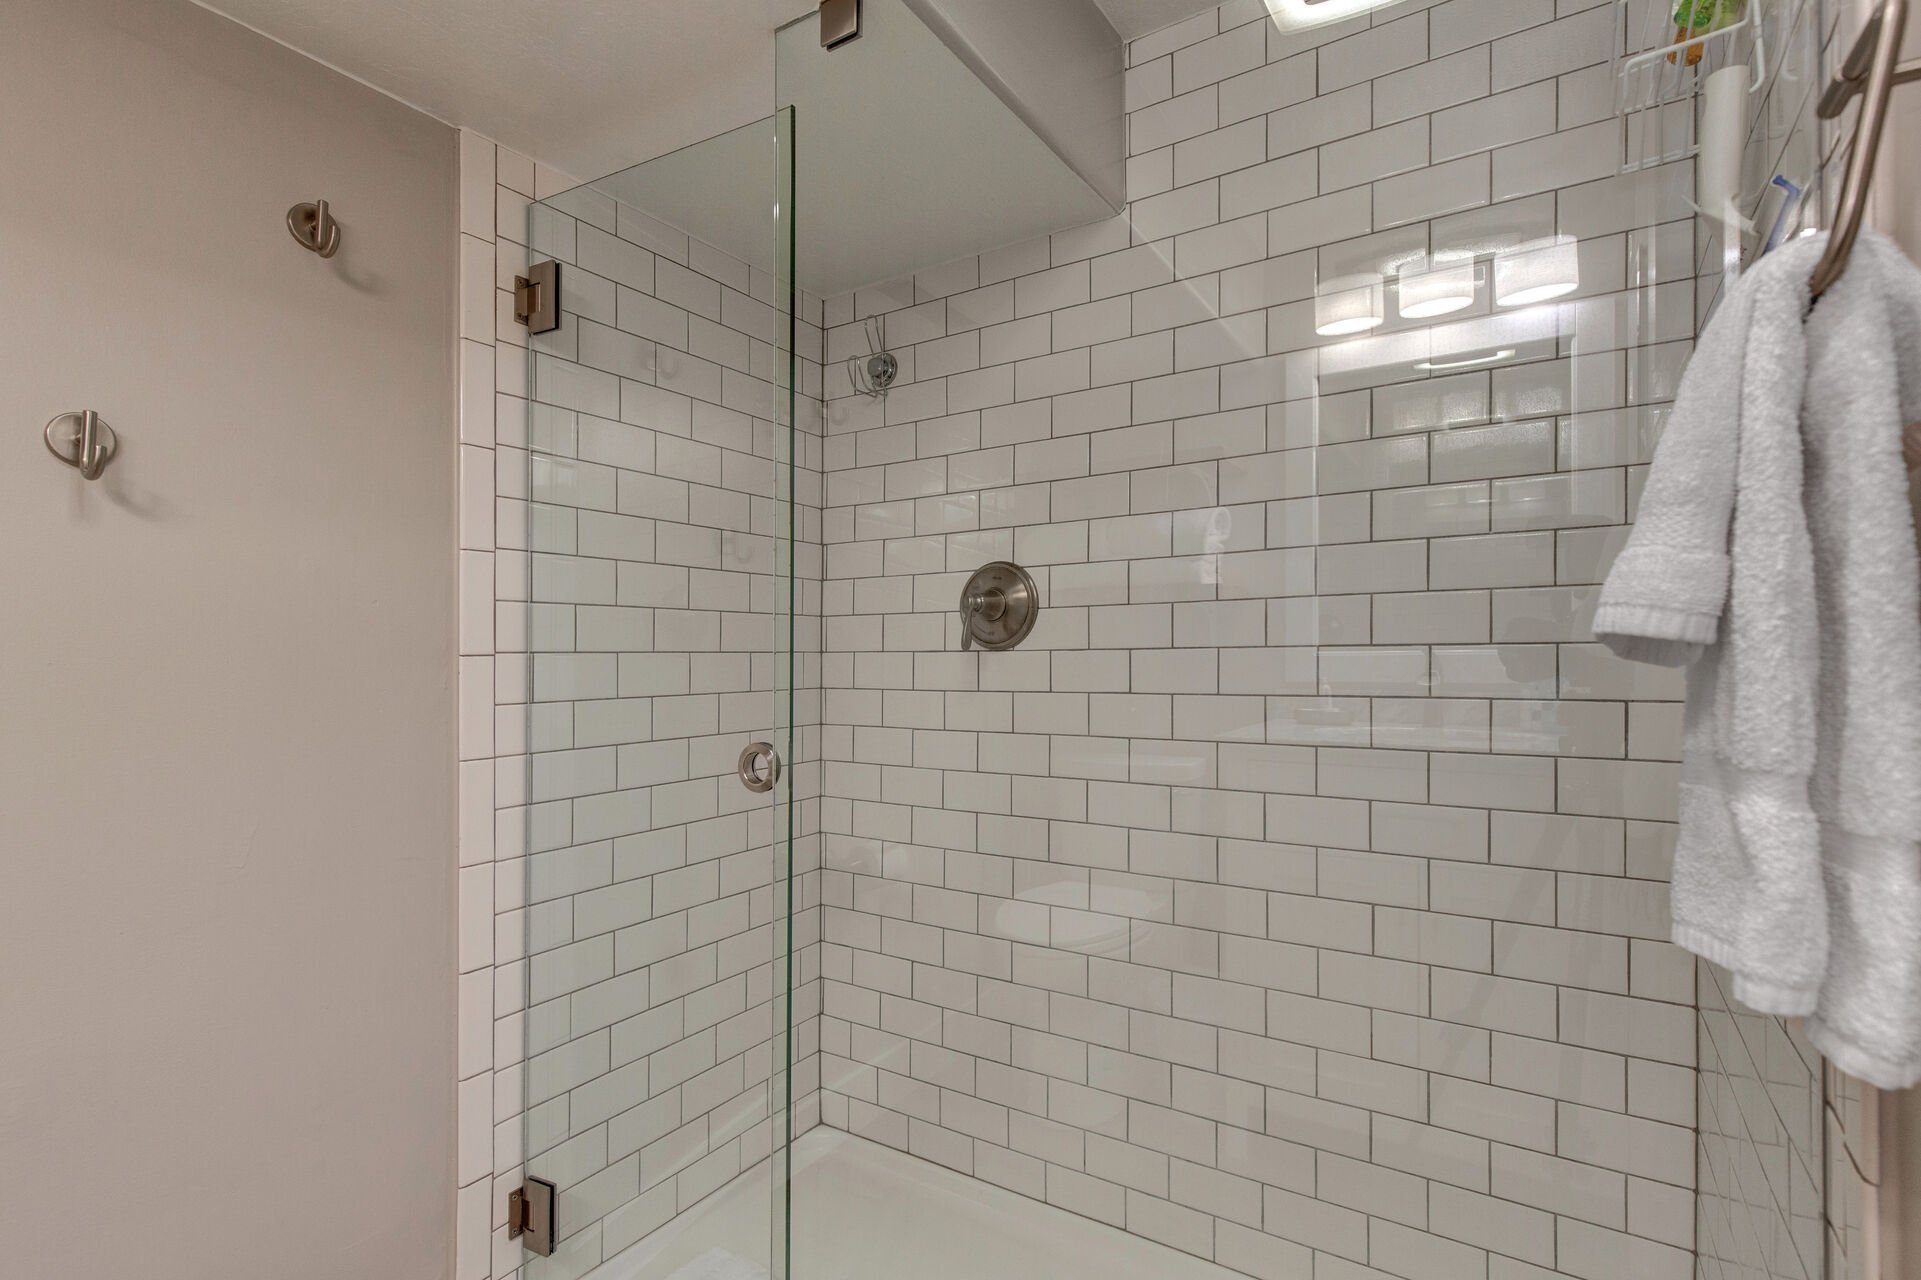 Main Level shared full bathroom with large tiled shower